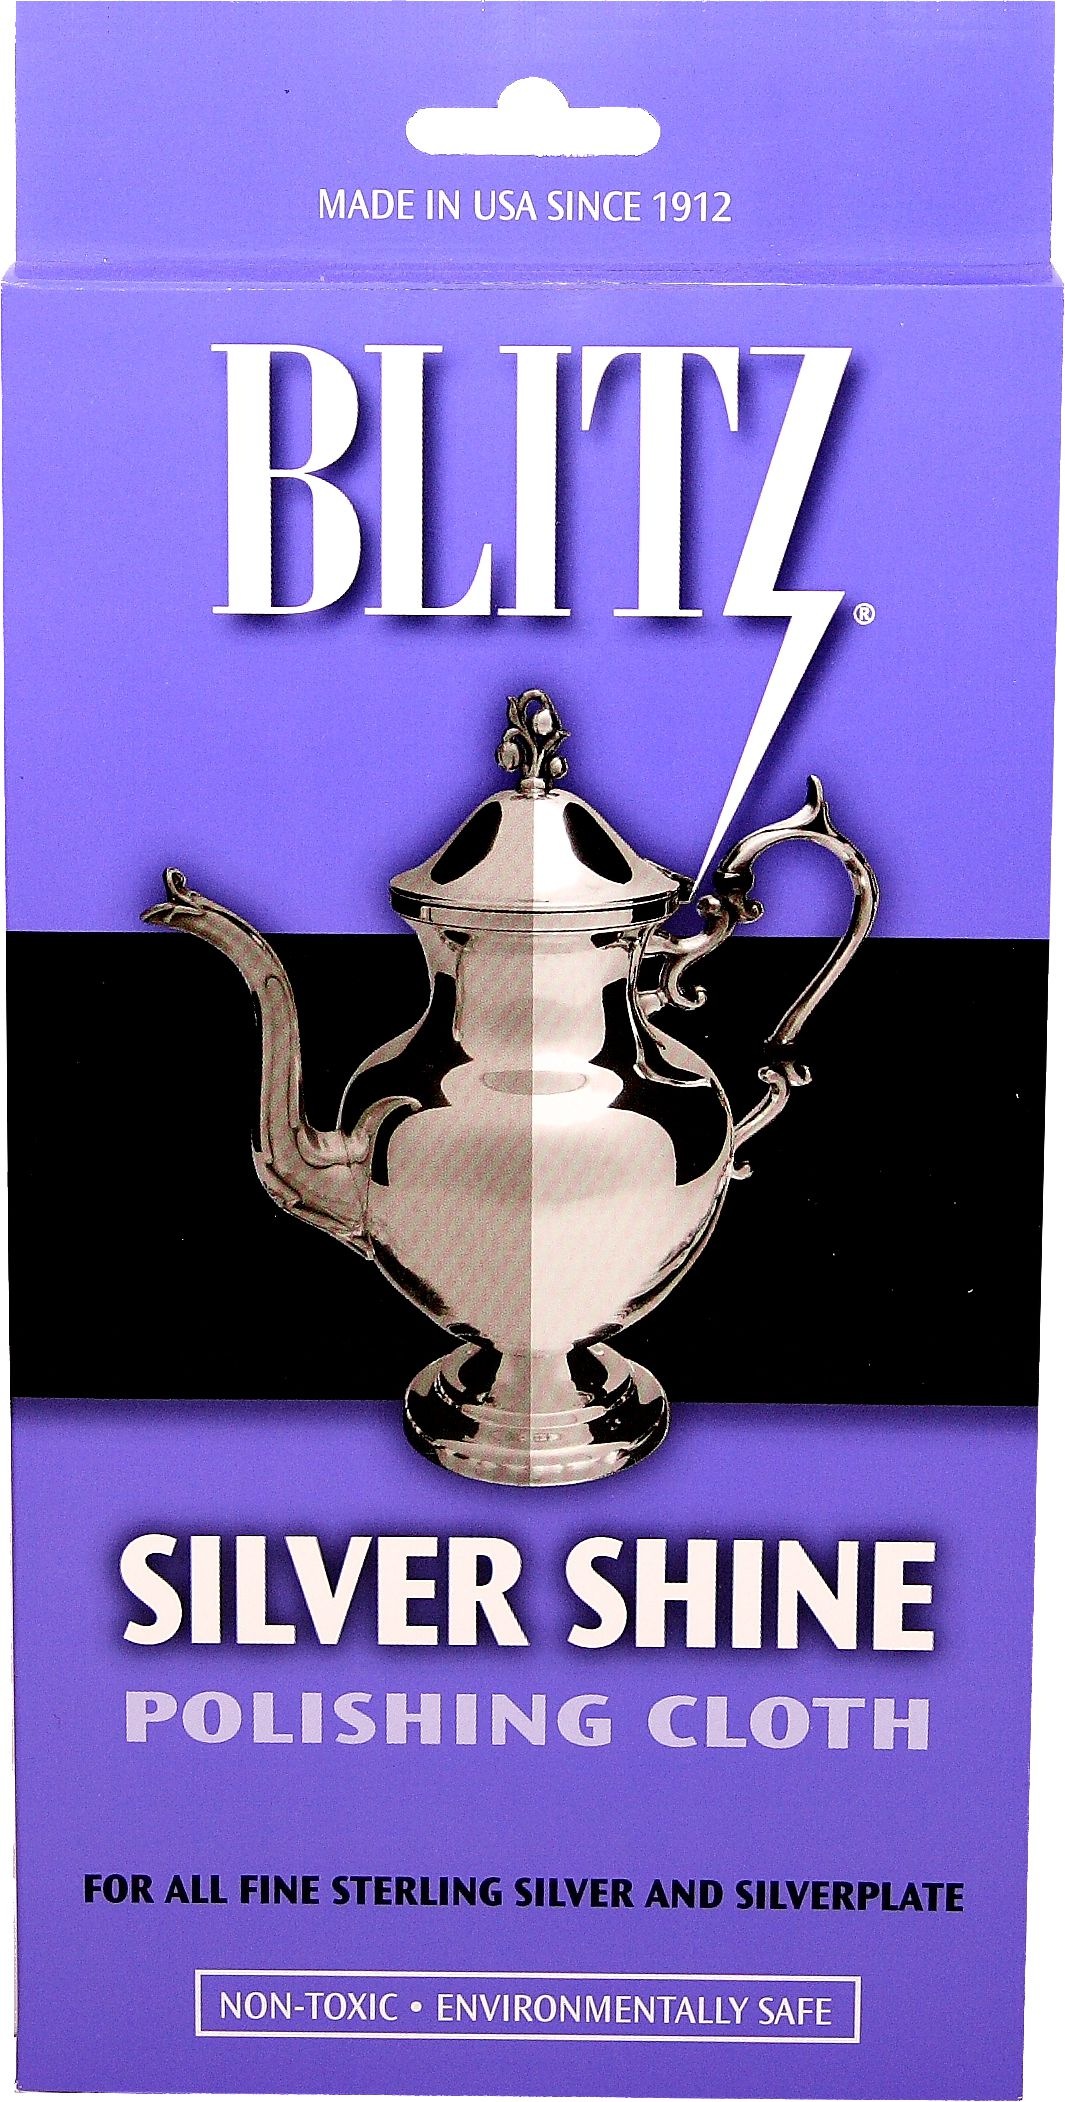 Silver Shine Silver Polishing Cloth